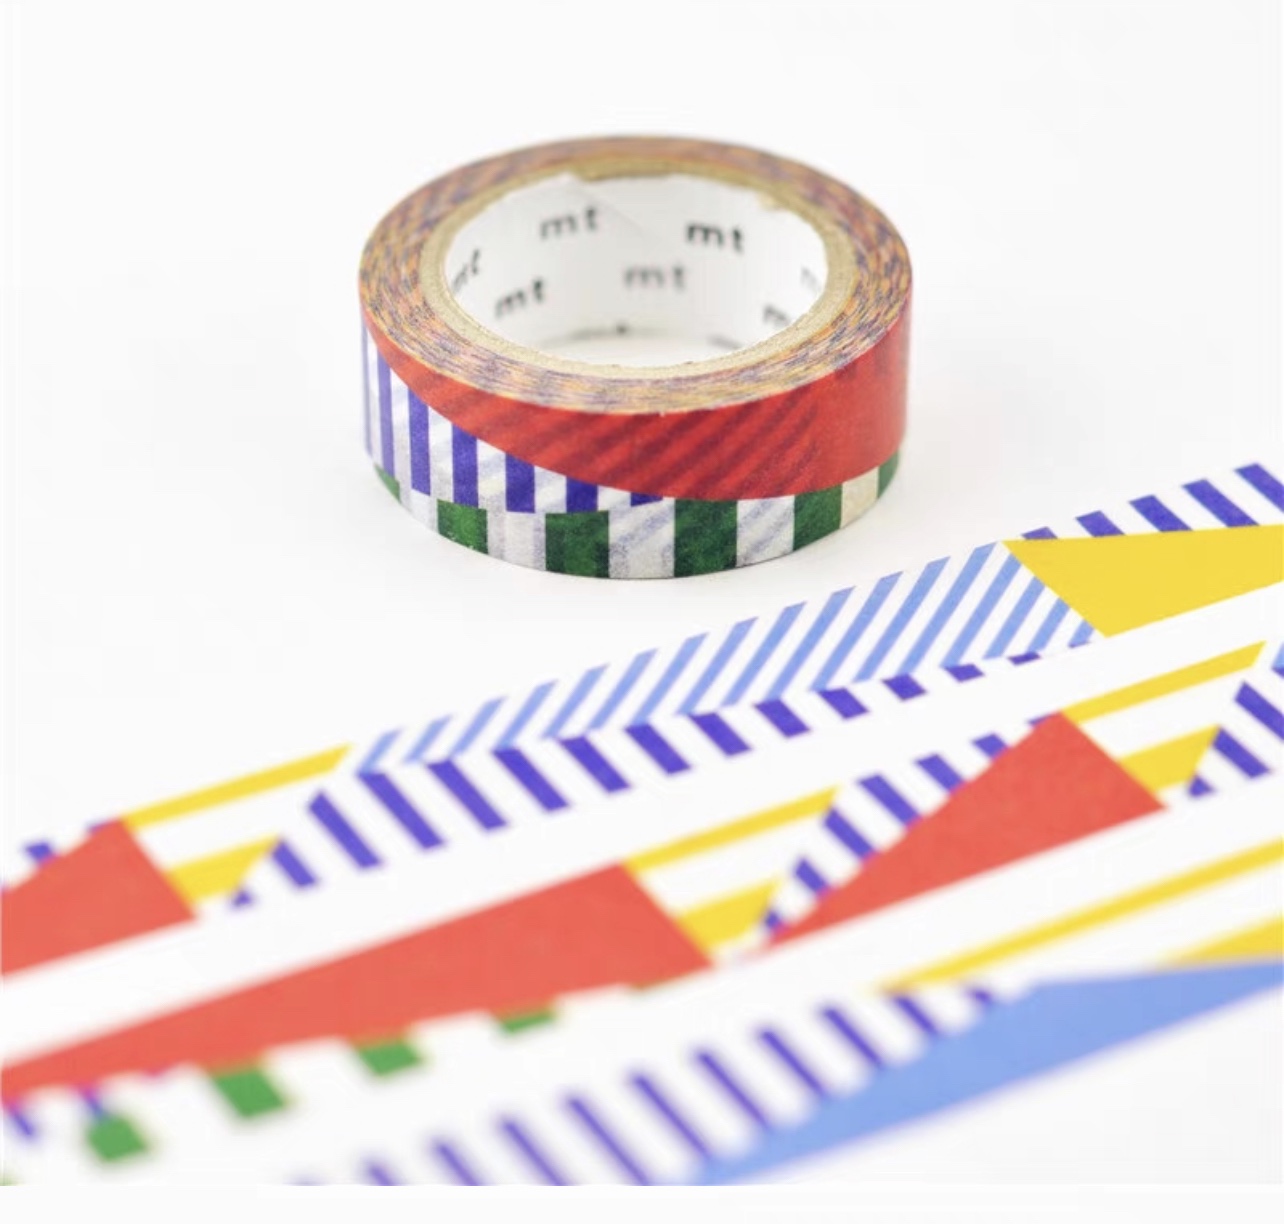 mt tape _ colourful geometric patterns